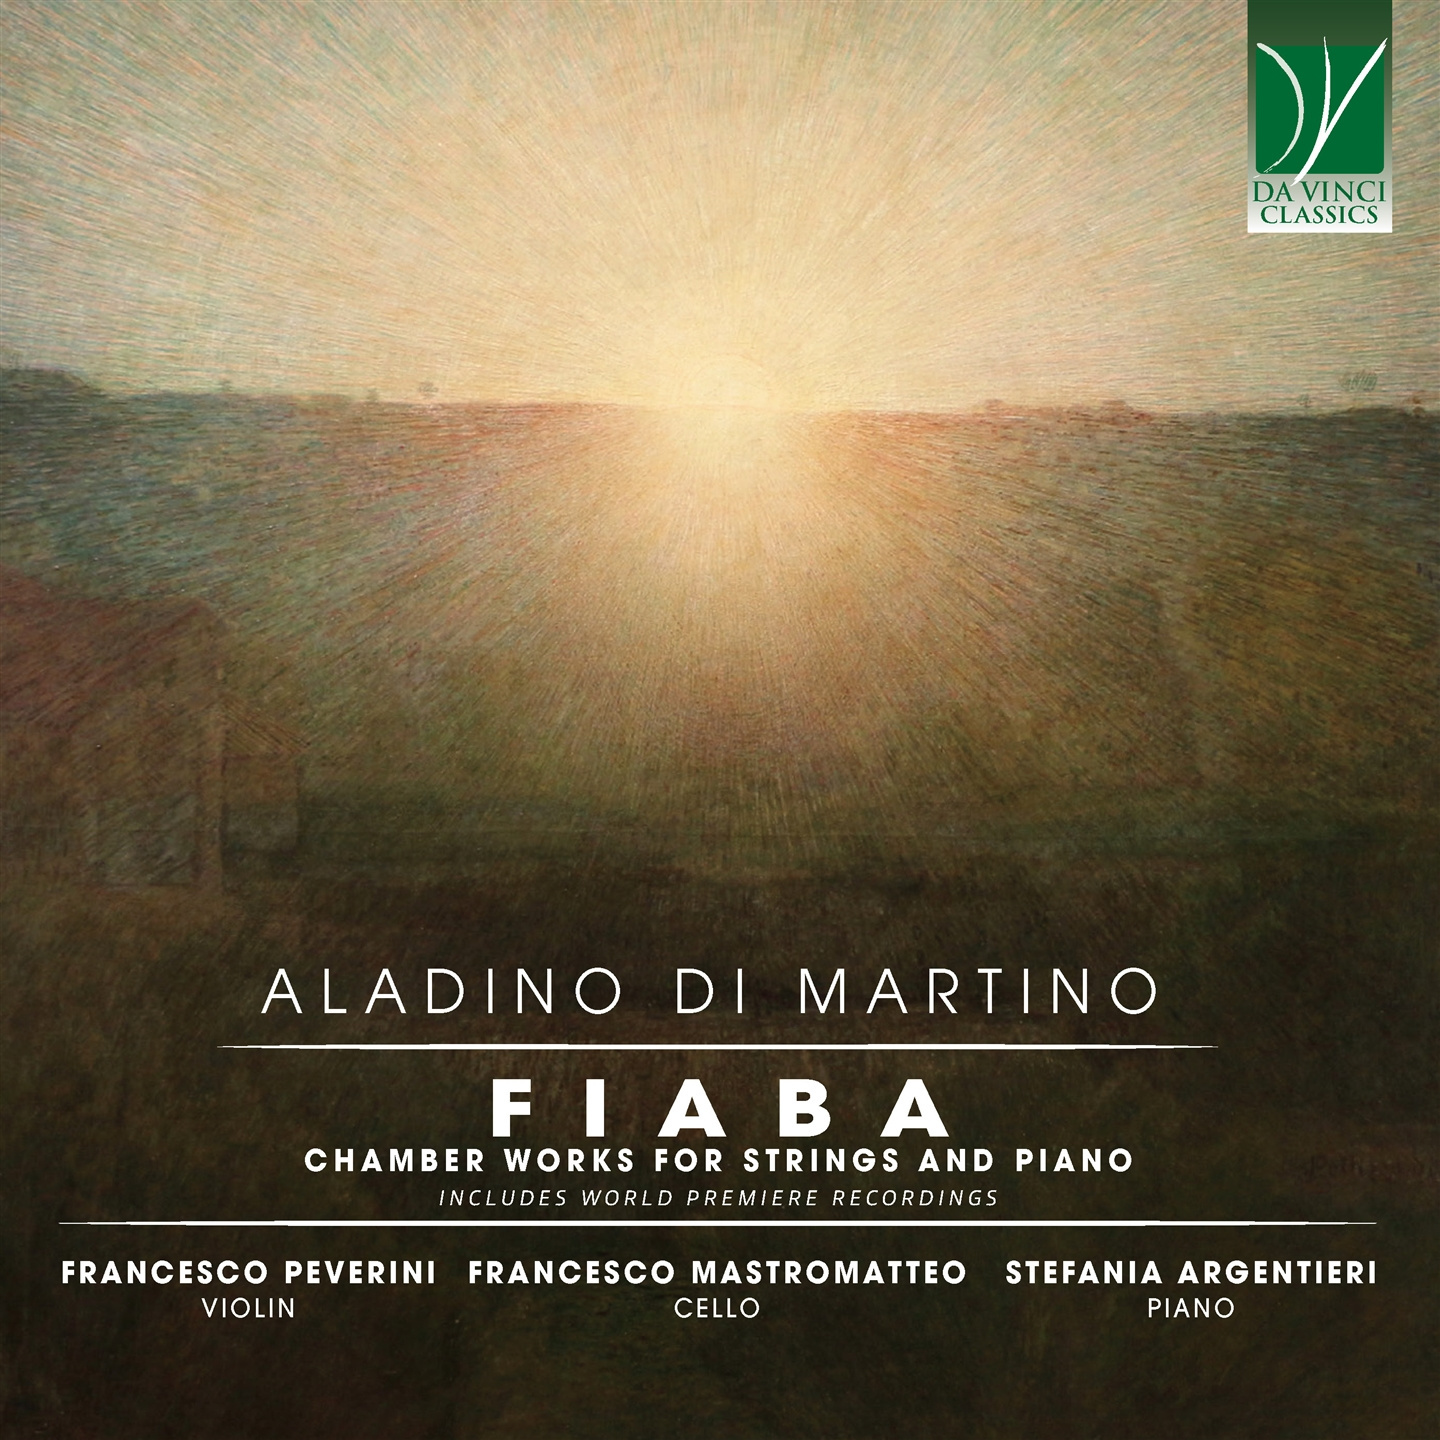 ALADINO DI MARTINO: FIABA, CHAMBER WORKS FOR STRINGS AND PIANO